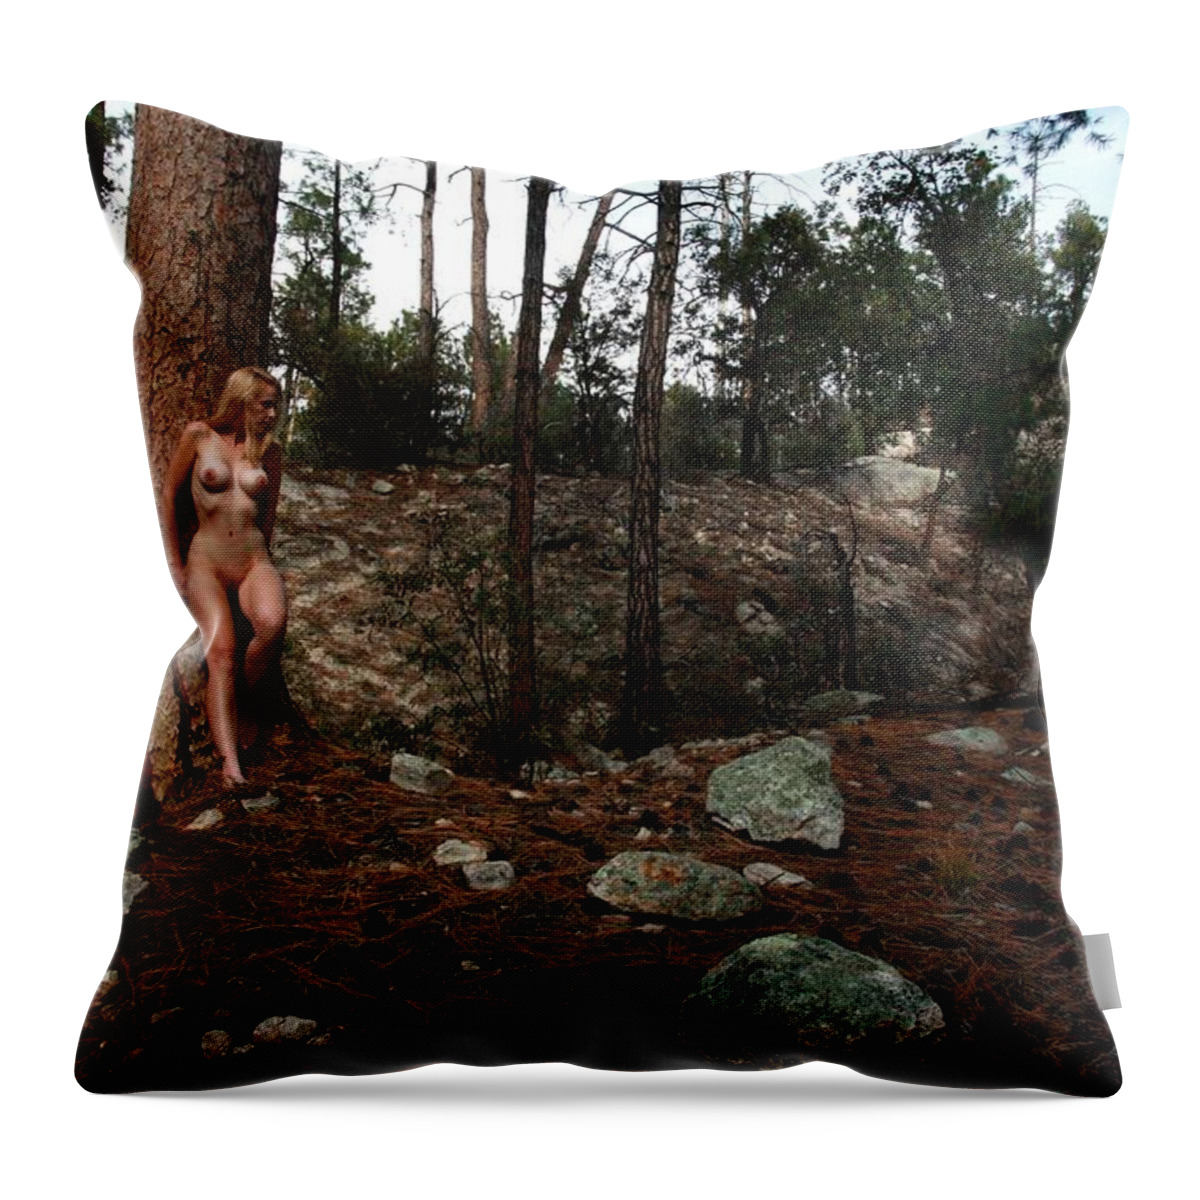 Woman Throw Pillow featuring the photograph Wood Nymph by Joe Kozlowski